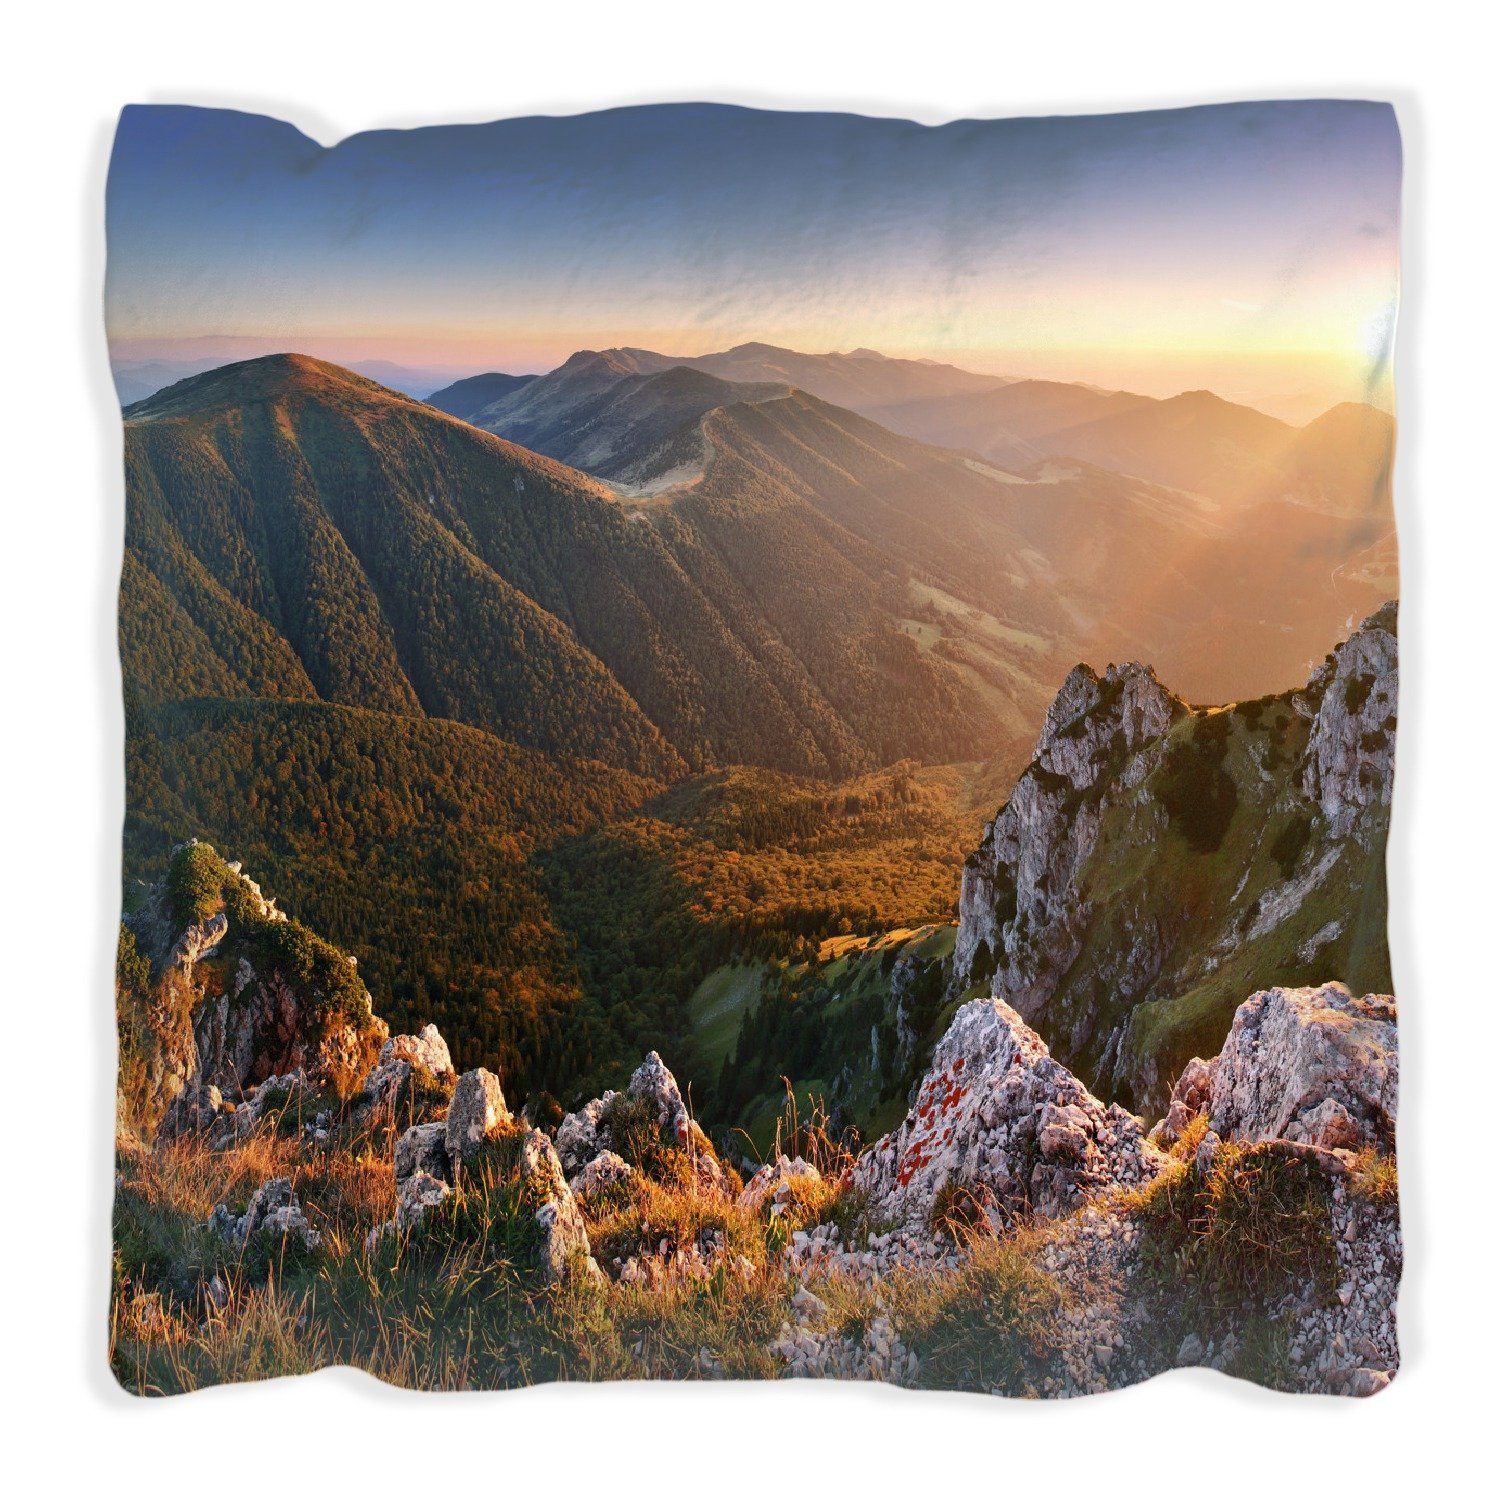 Wallario Dekokissen Berglandschaft mit Sonnenuntergang in der Slowakei, handgenäht